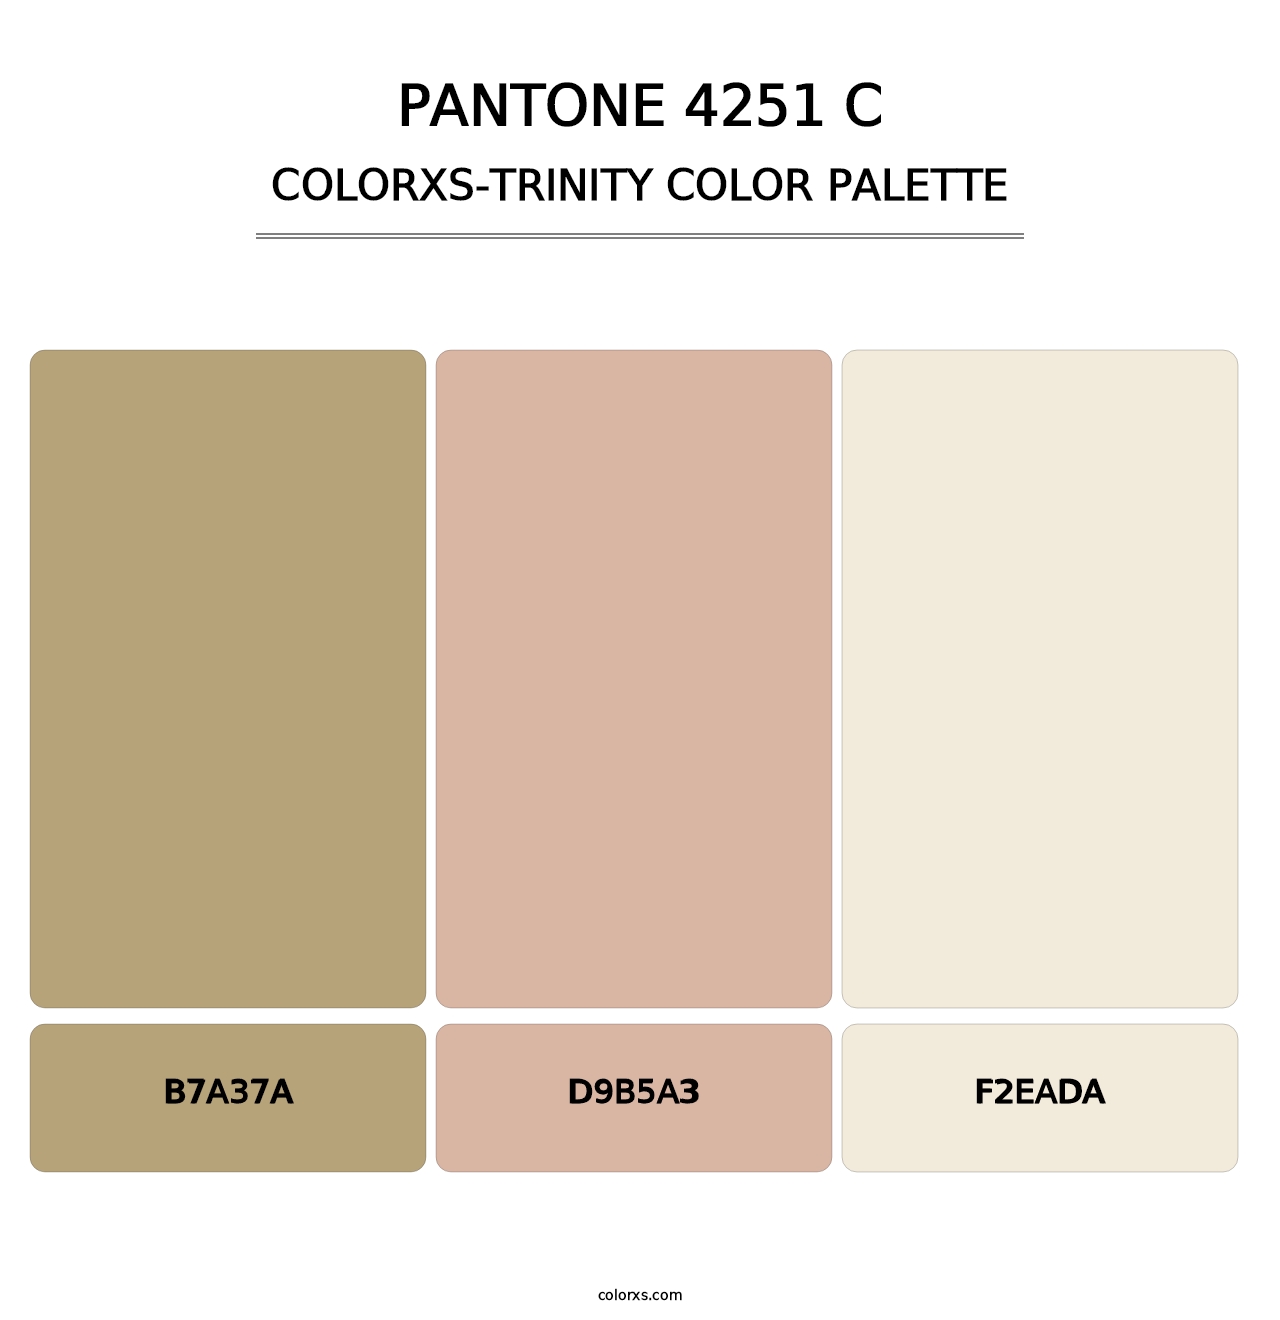 PANTONE 4251 C - Colorxs Trinity Palette